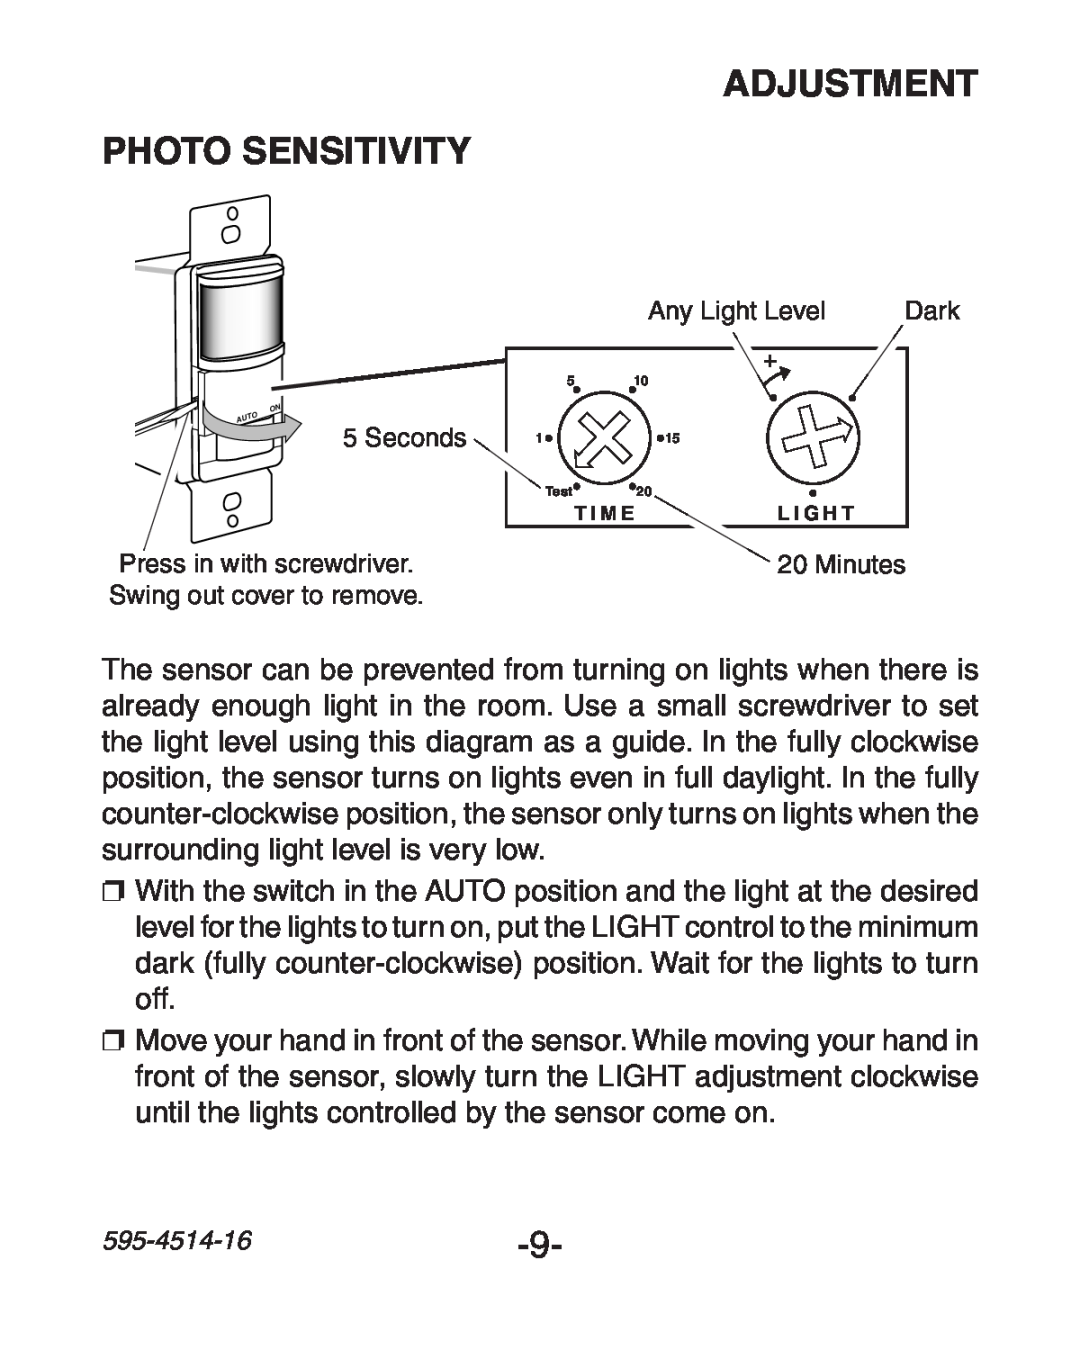 Heath Zenith 6107 manual ADJUSTMENT Photo Sensitivity, Seconds 